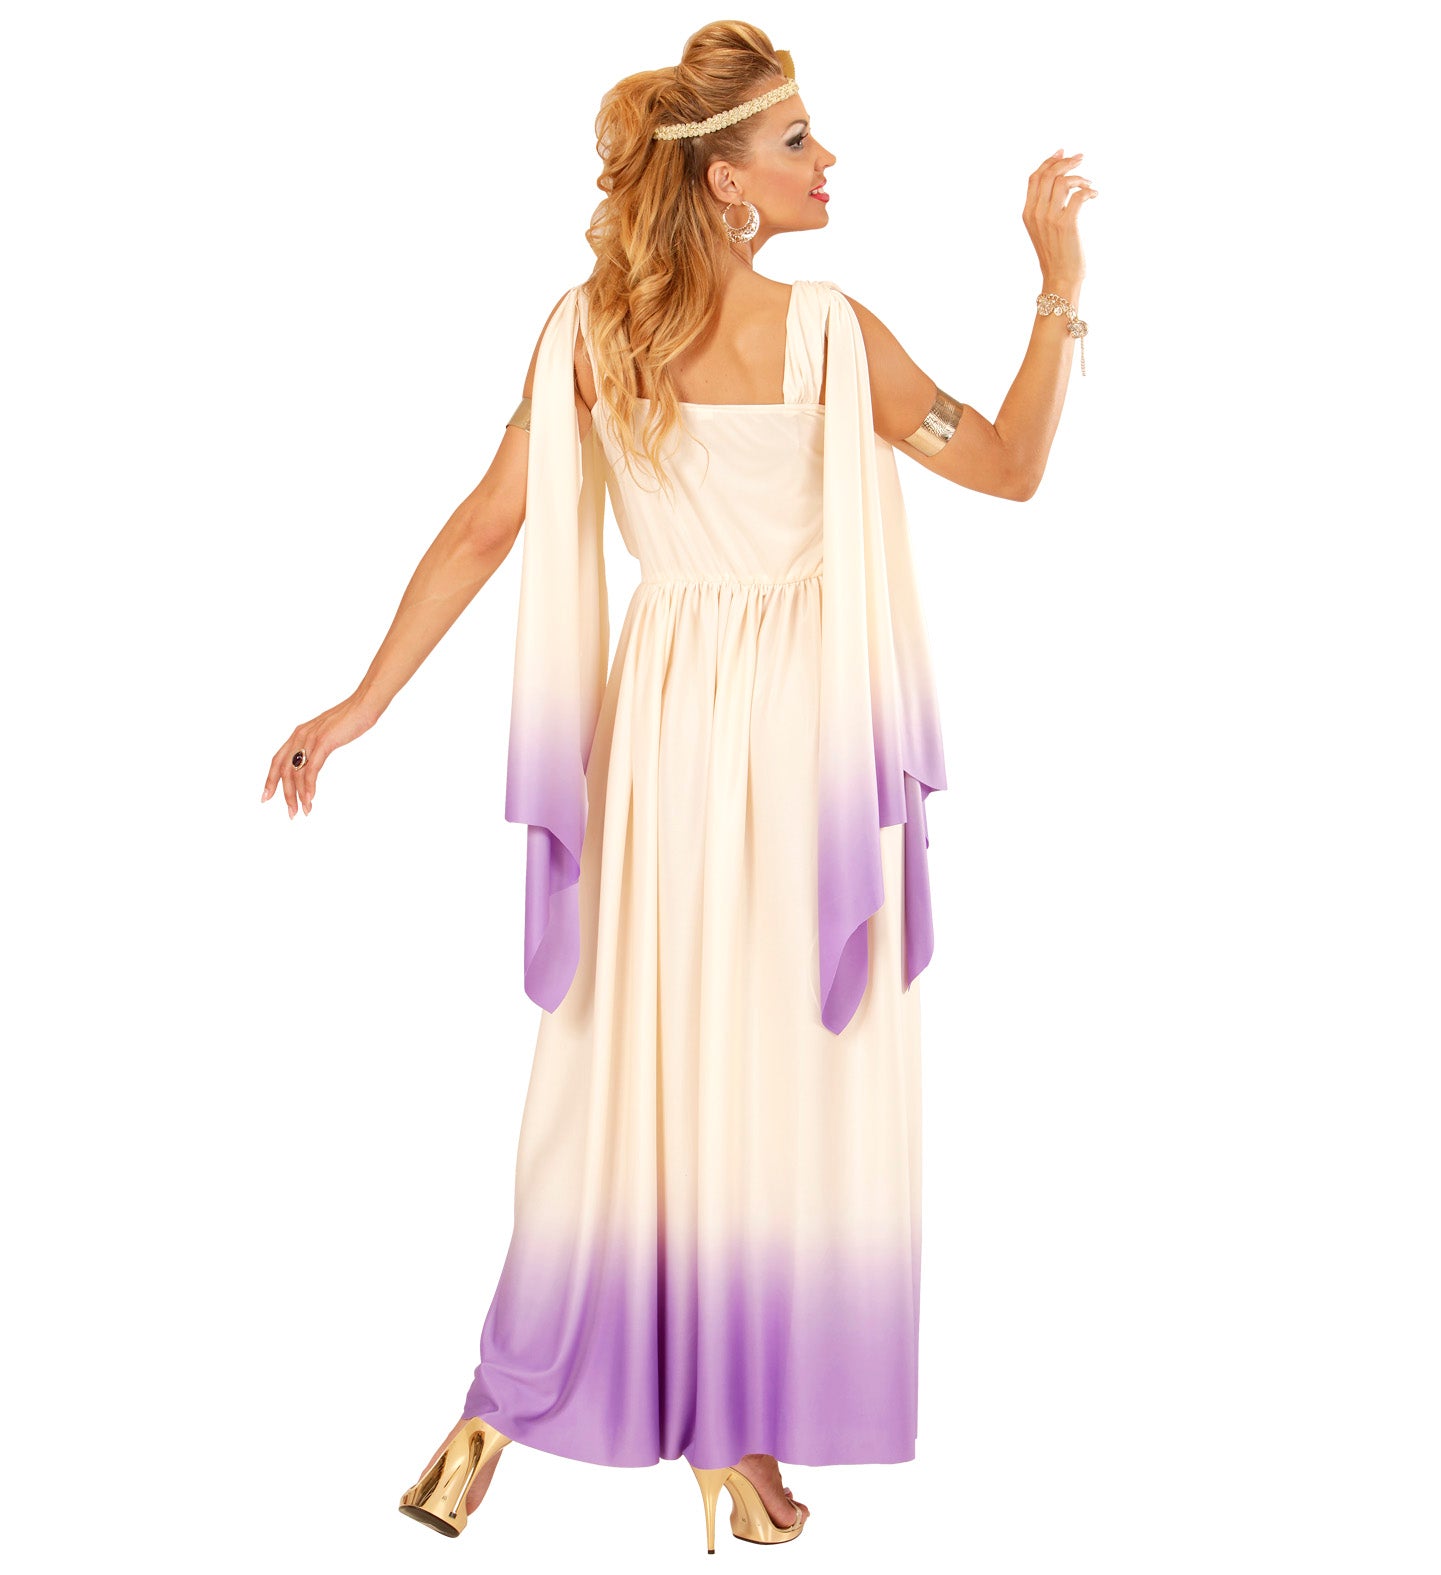 Greek Goddess Costume rear